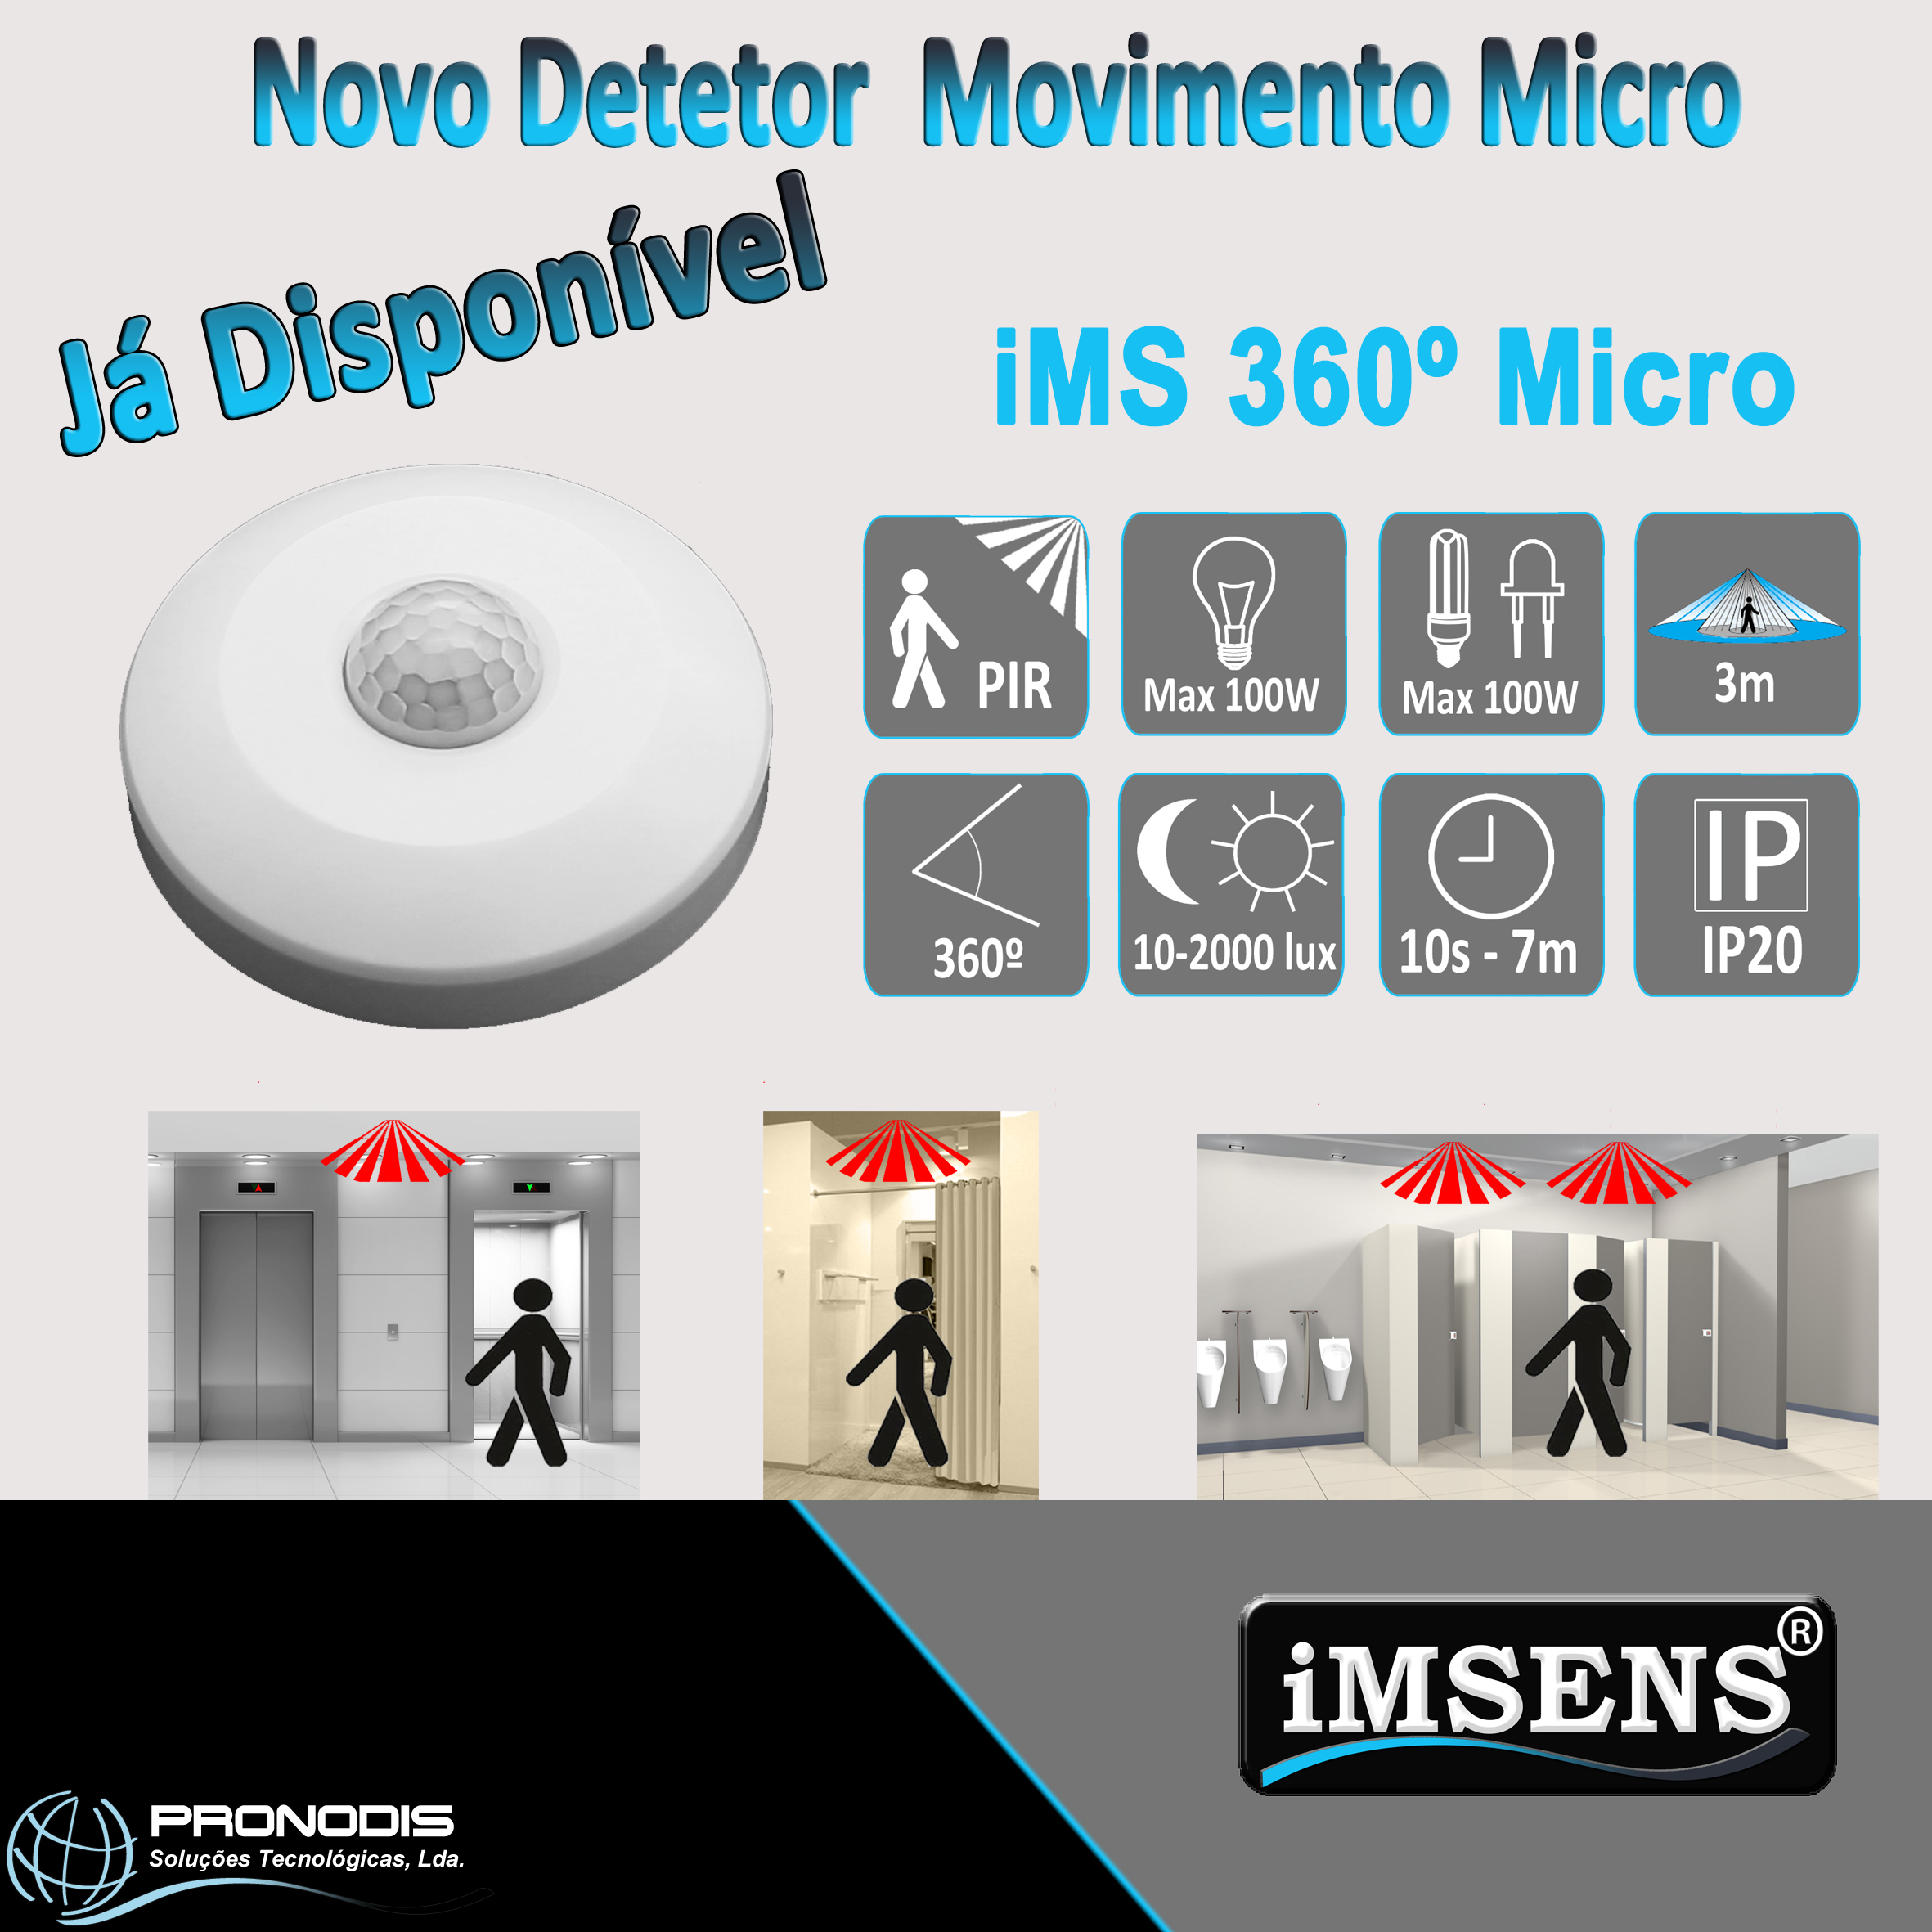 Novo detetor movimento - iMS 360º Micro da iMSENS